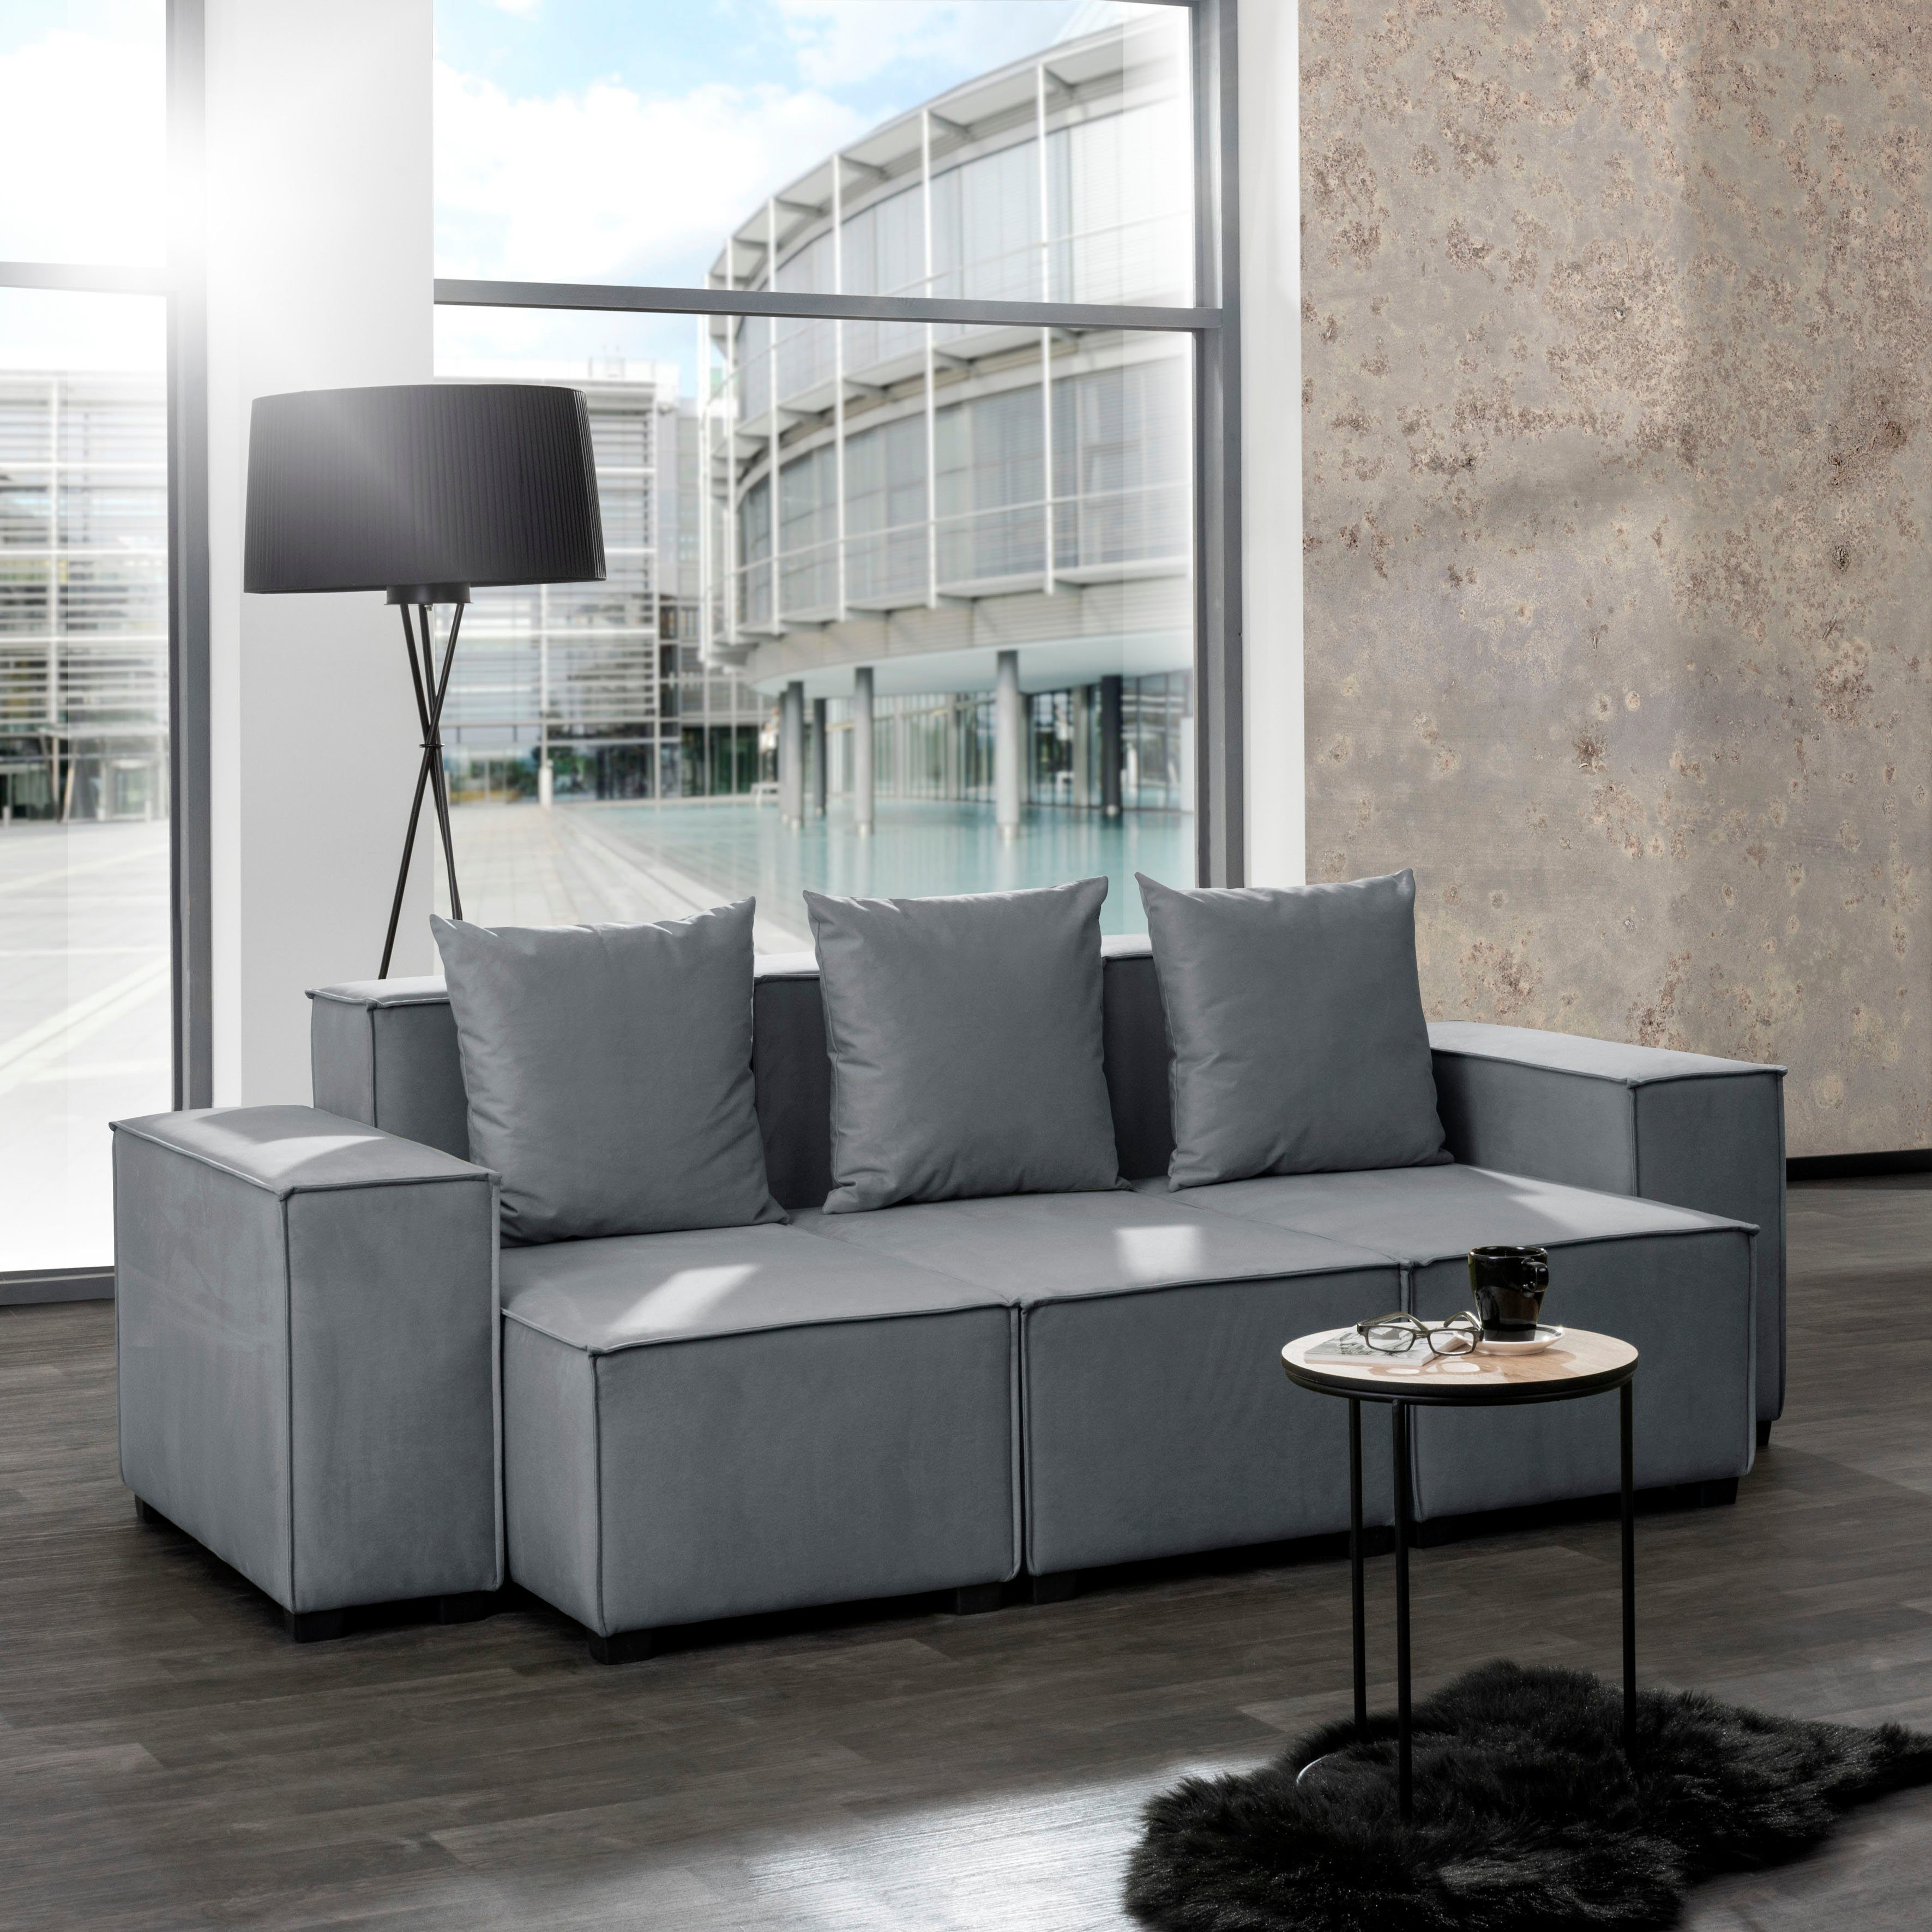 Max Winzer® Wohnlandschaft MOVE, Set, Sofa-Set 02 aus 8 Sitz-Elementen, inklusive 3 Zierkissen, kombinierbar grau | Wohnlandschaften